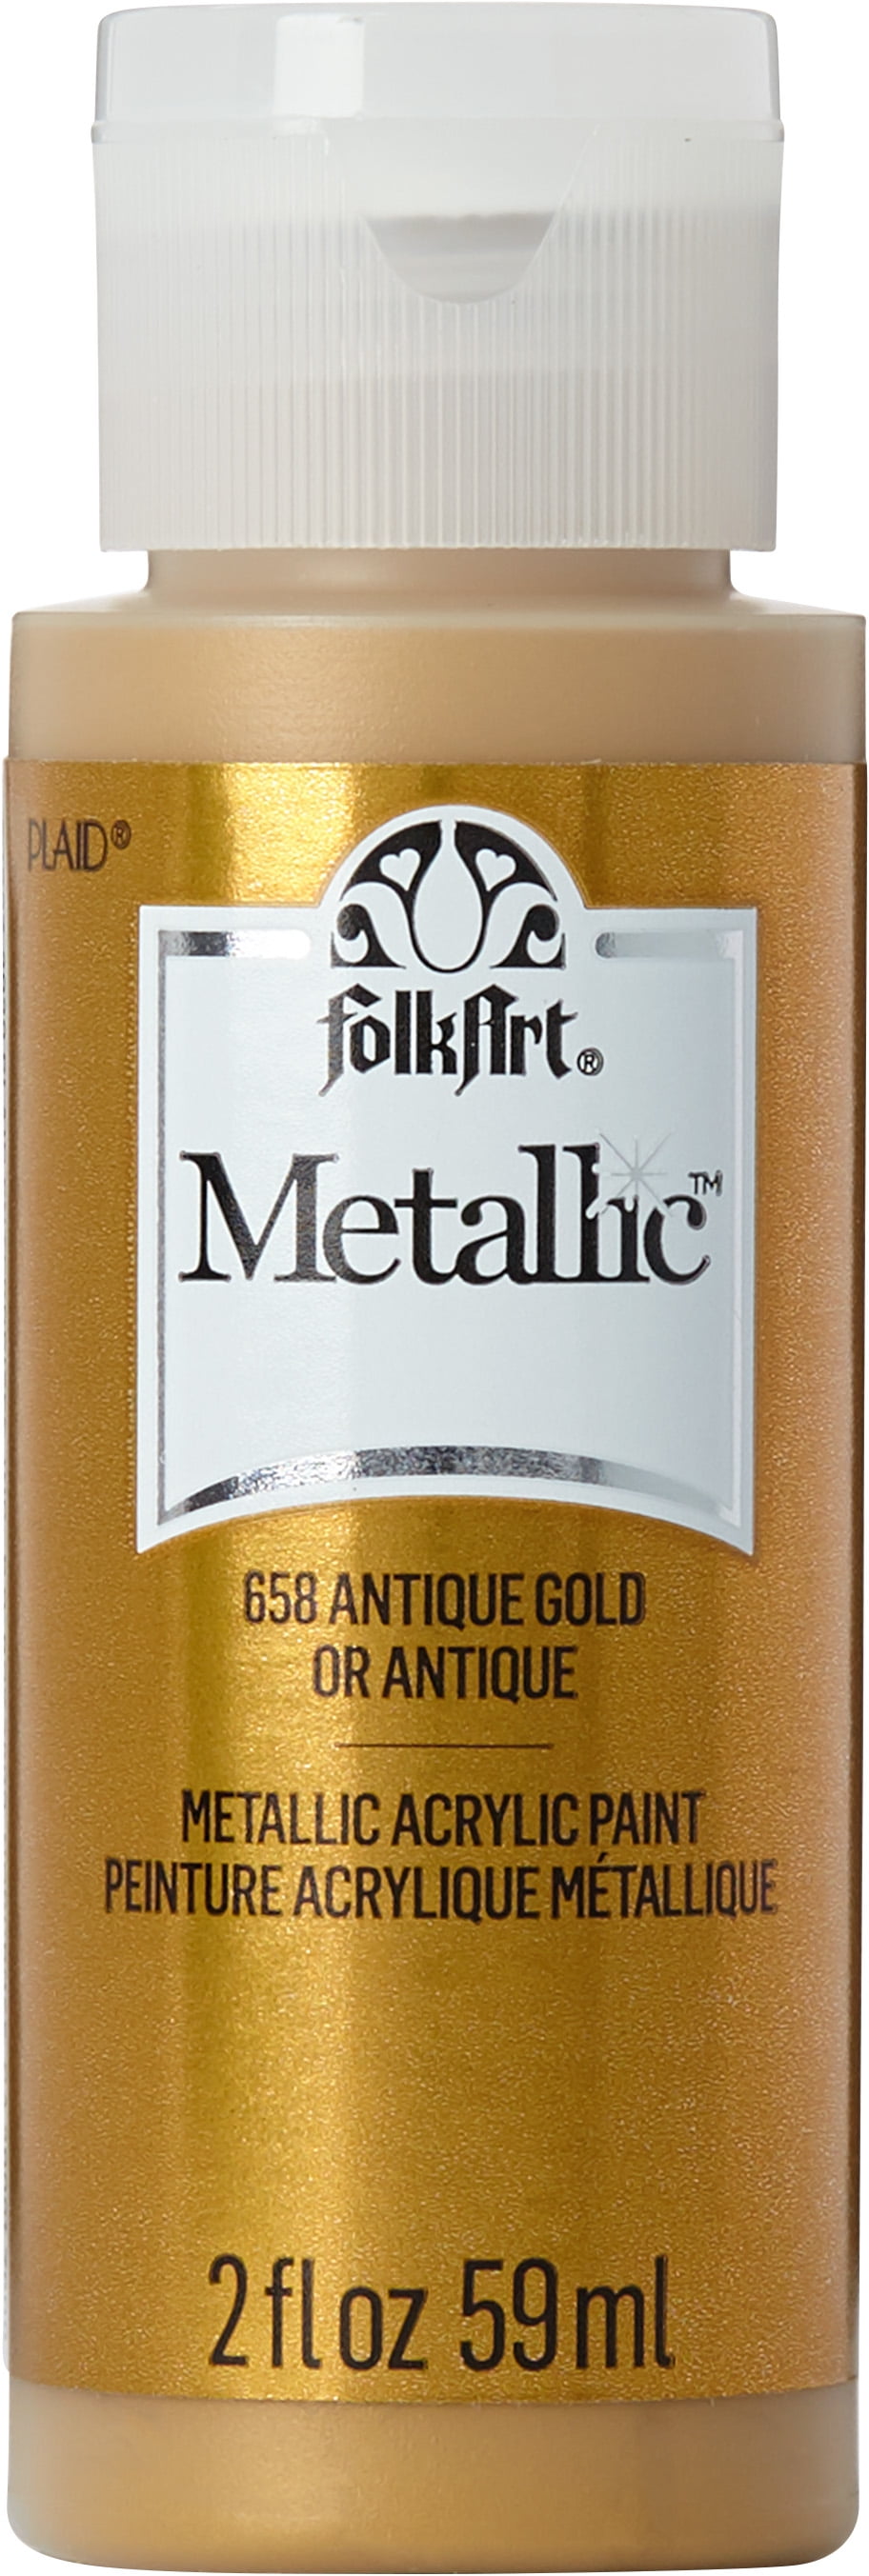 FolkArt Metallic Acrylic Paint, Antique Gold - 2 fl oz bottle